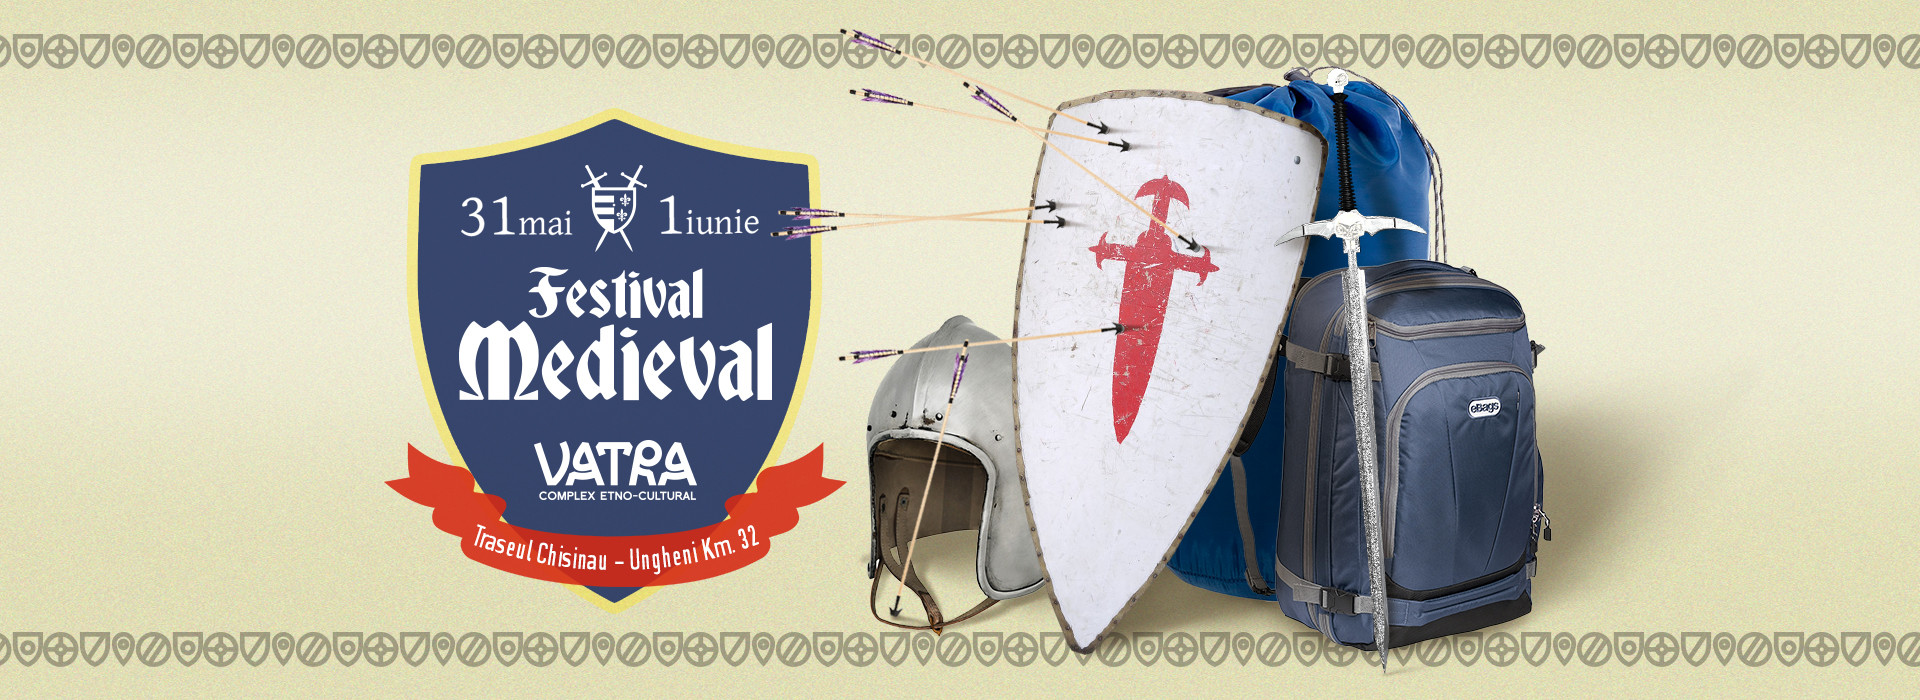 Festival medieval la Vatra